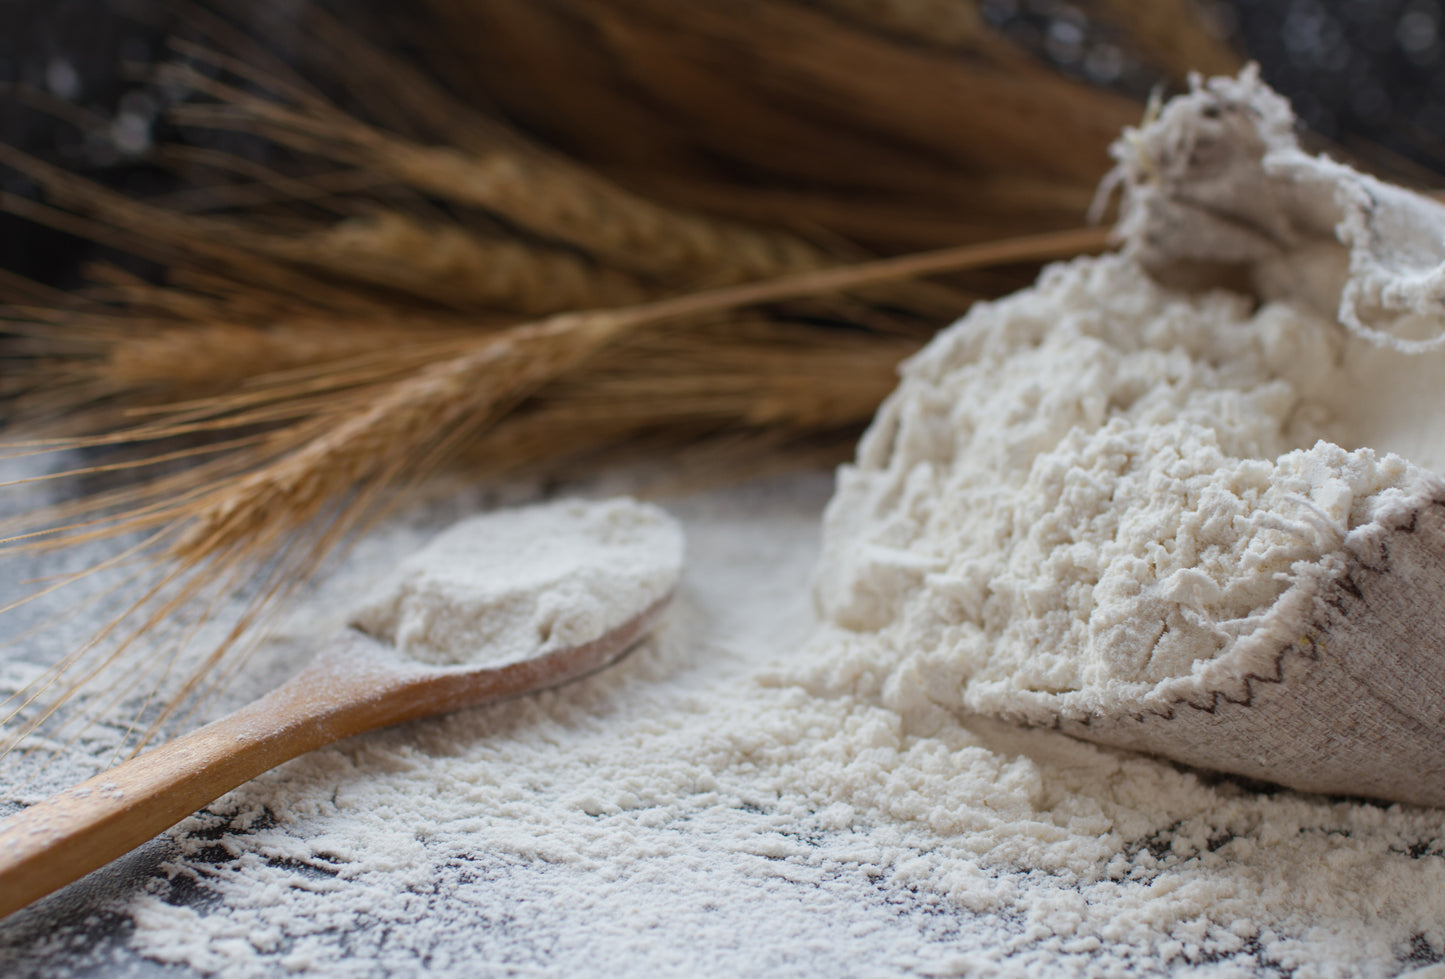 Organic Wheat Flour Khapli